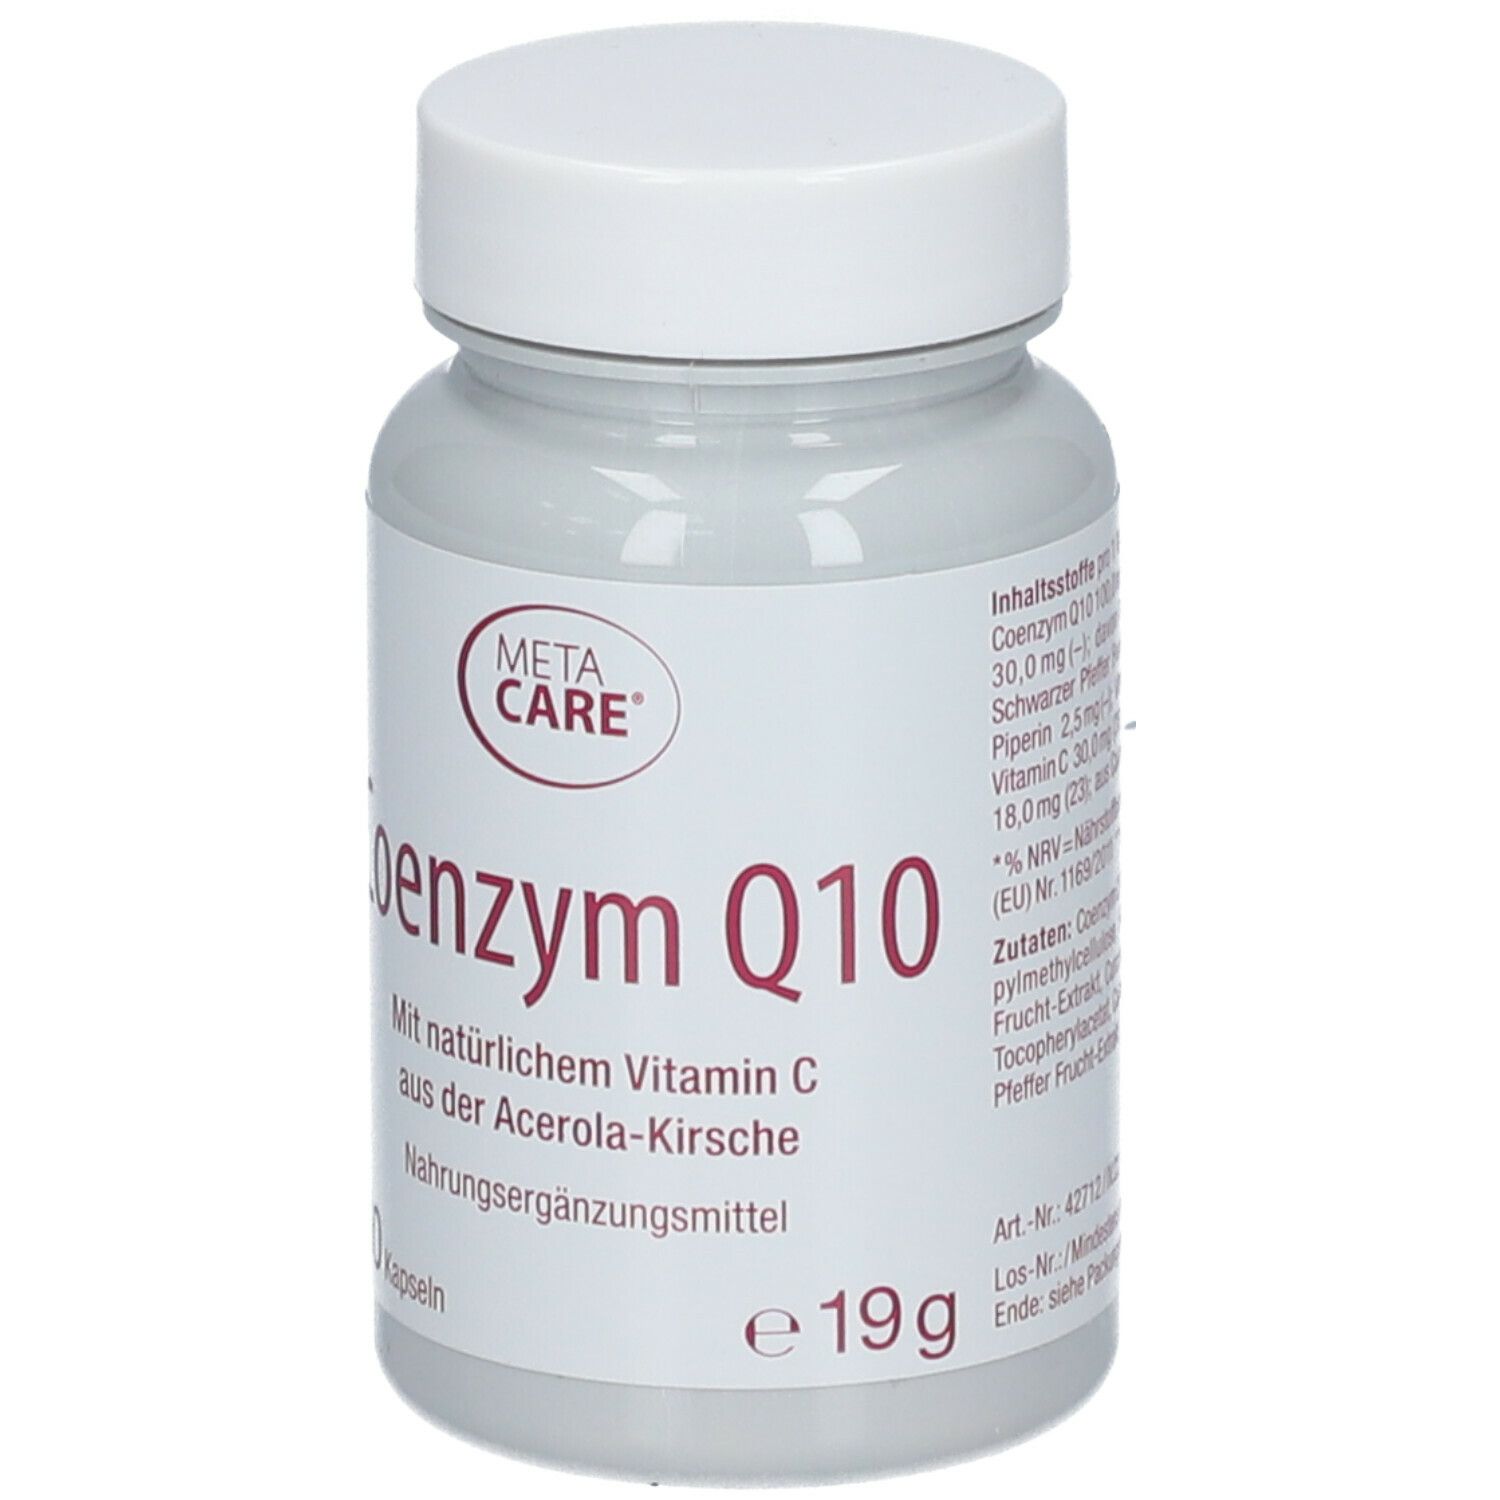 metacare® Coenzym Q10